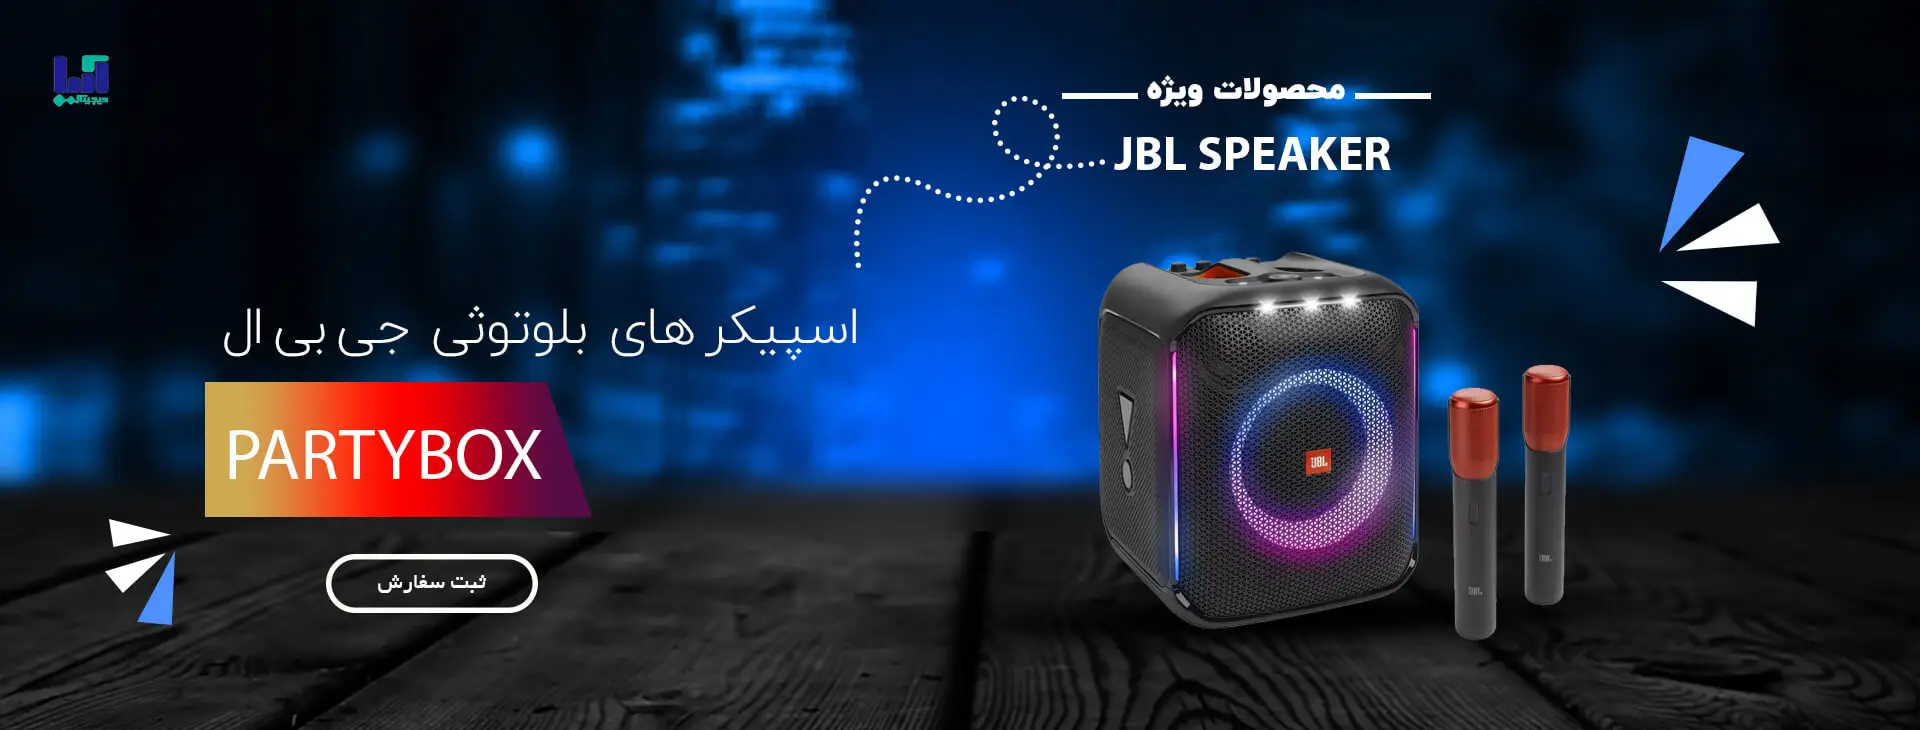 jbl-speaker-pc